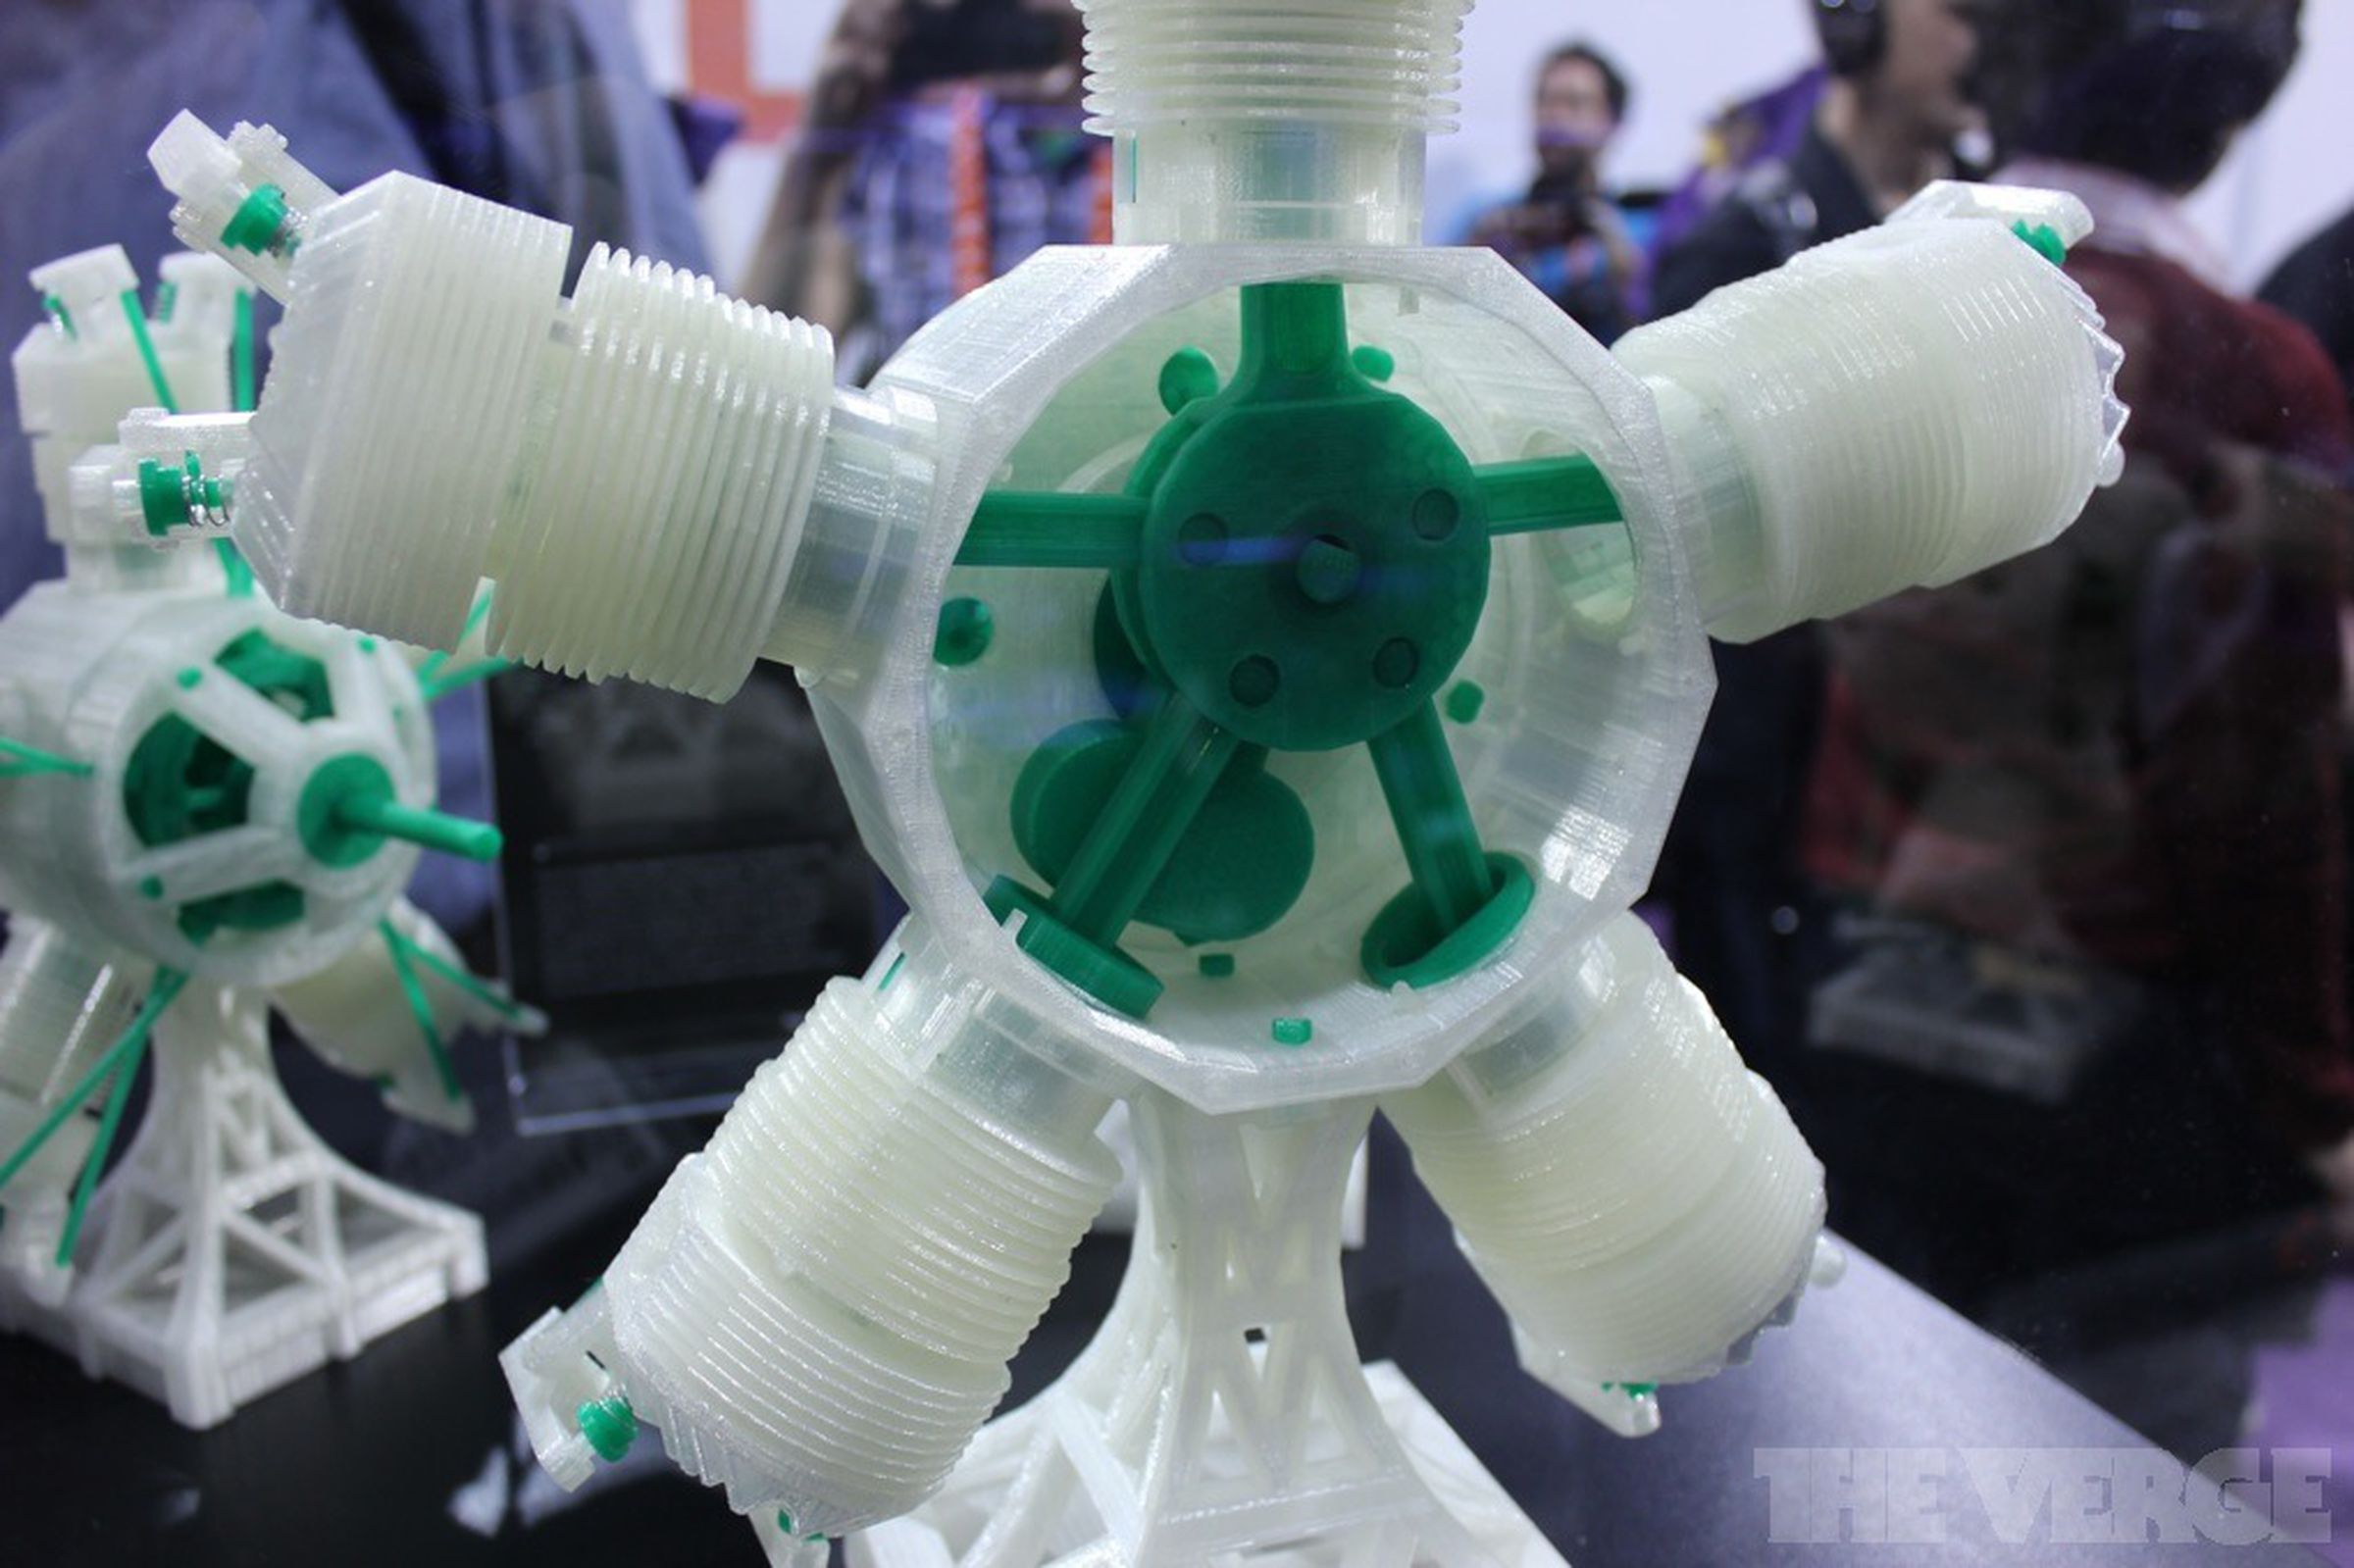 MakerBot Replicator 2X hands-on photos